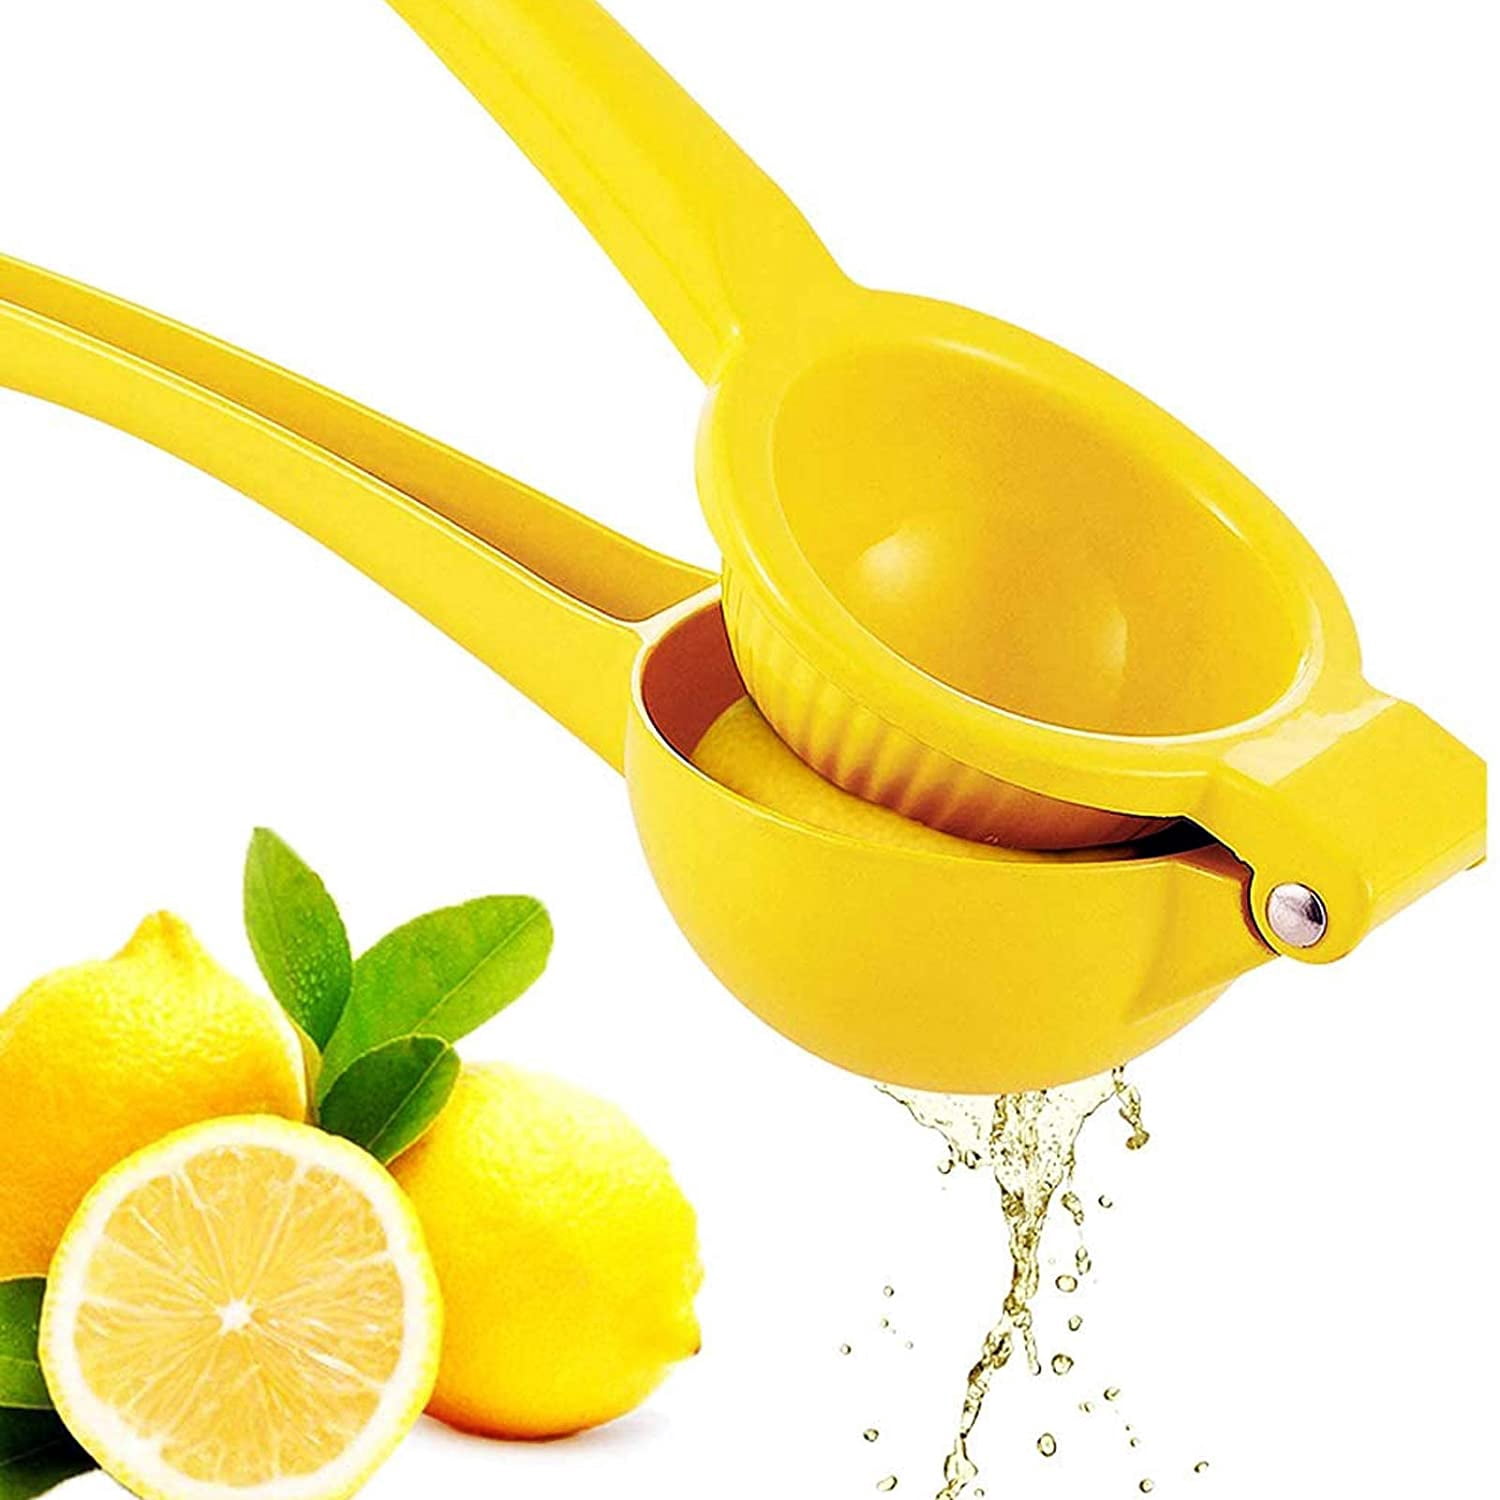 Premium Quality Metal Lemon Squeezer / Lime Juice Press / Citrus Juicer $2.90 + Free S&H w/ Walmart+ or $35+